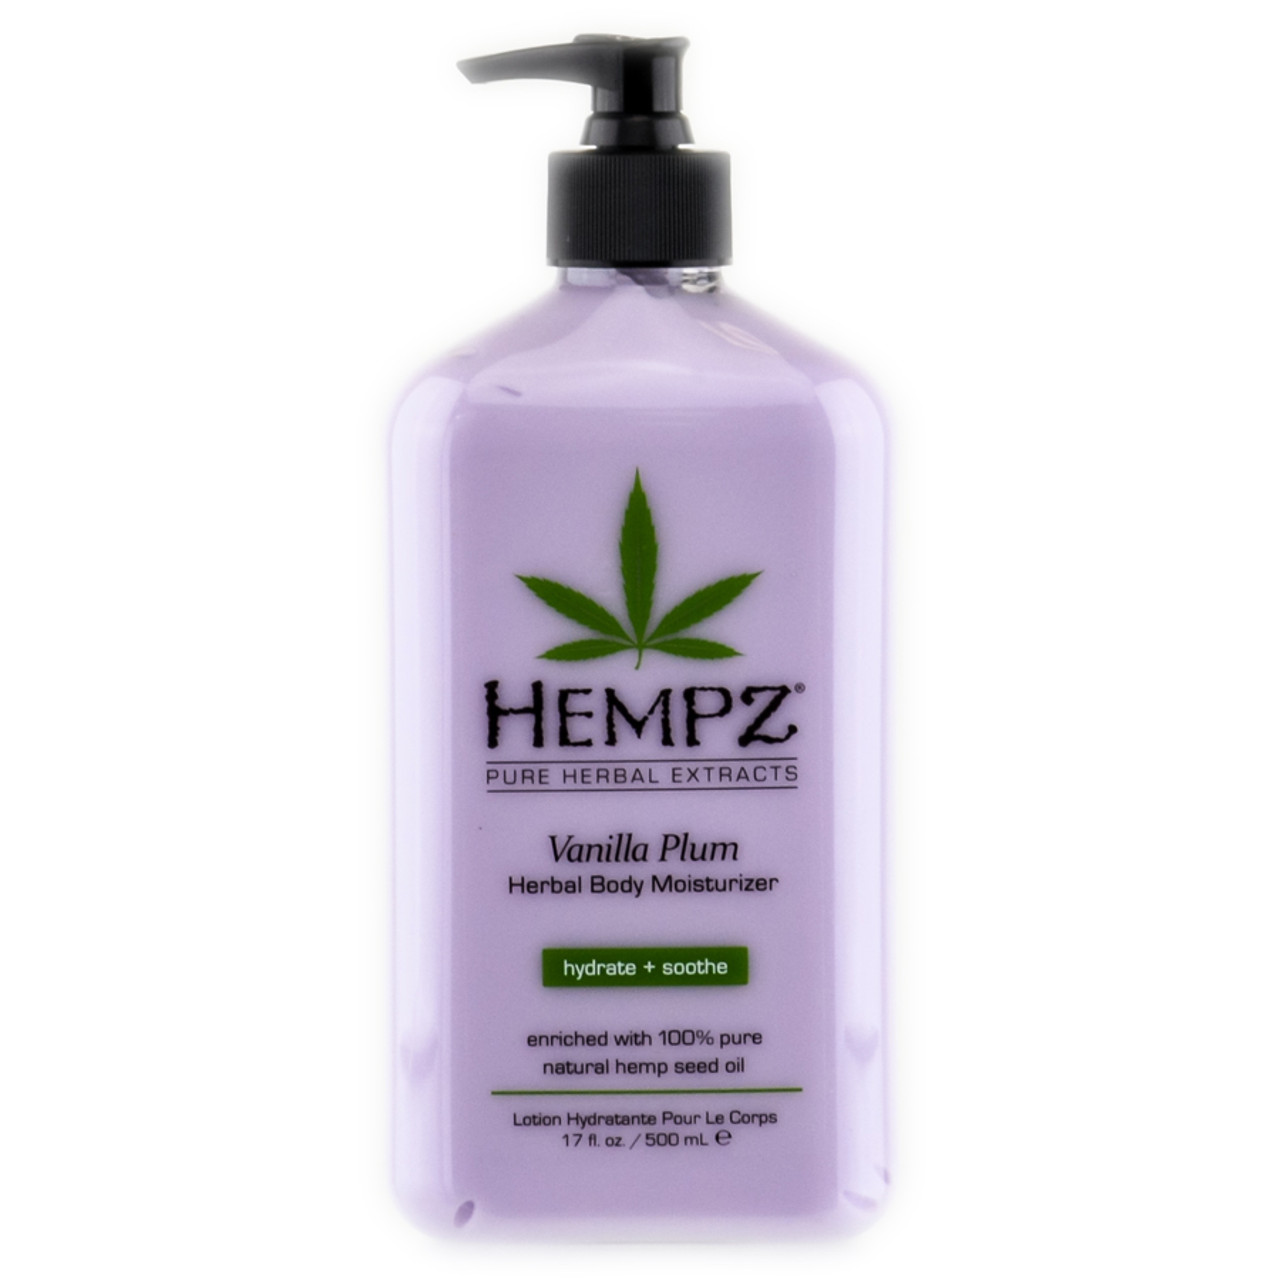 Hempz Vanilla Plum Herbal Body Moisturizer Lotion - SleekShop.com (formerly Sleekhair)